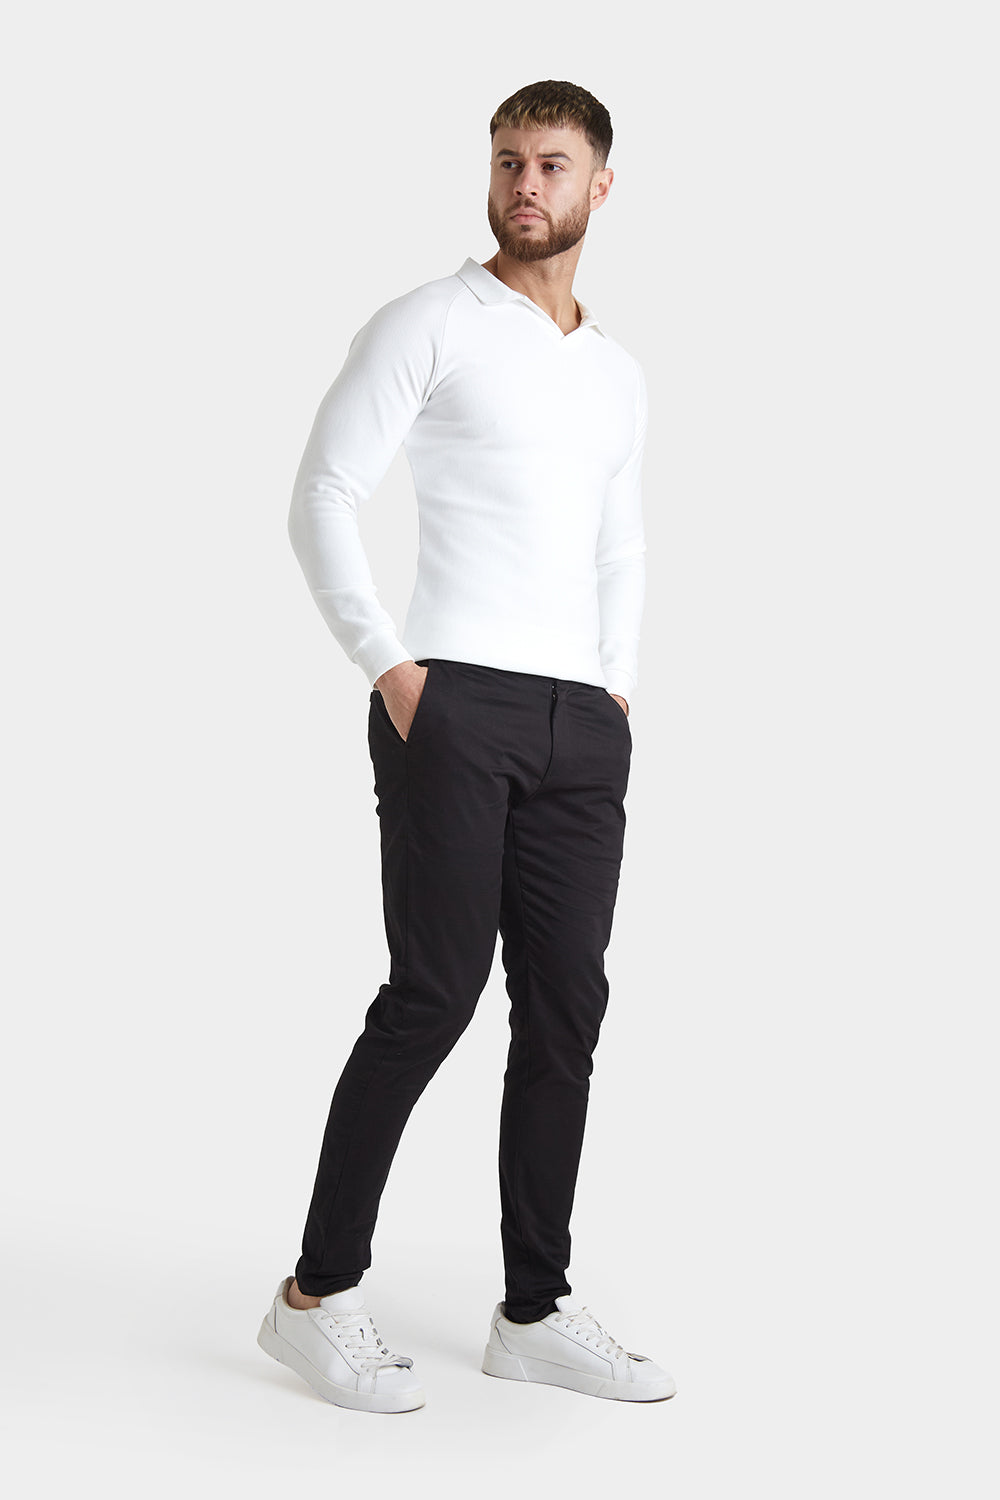 Men's White Long Sleeve Shirt, Navy Chinos, Black Snake Leather Low Top  Sneakers, Black Leather Zip Pouch | メンズファッション, 50代ファッション メンズ, 長袖シャツ